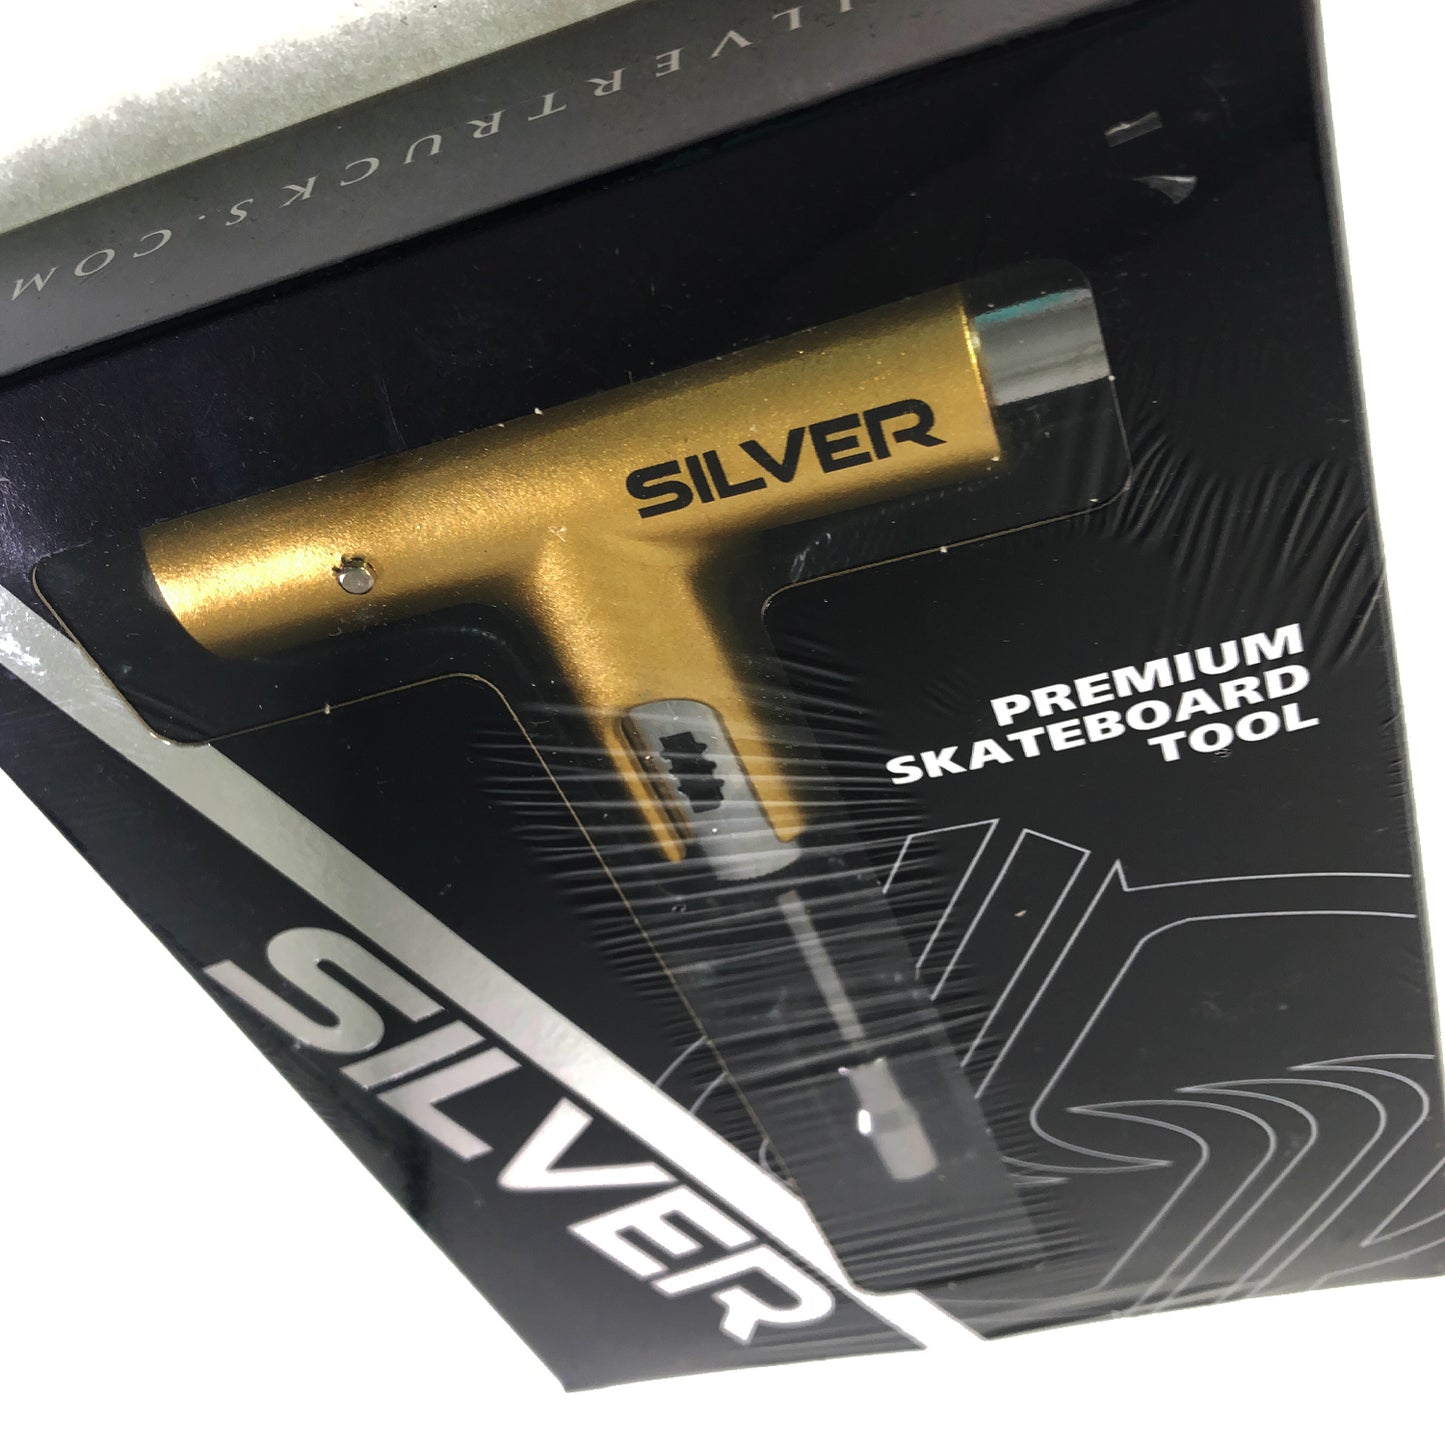 Silver - Premium Ratchet Skateboard Tool - Gold - Prime Delux Store